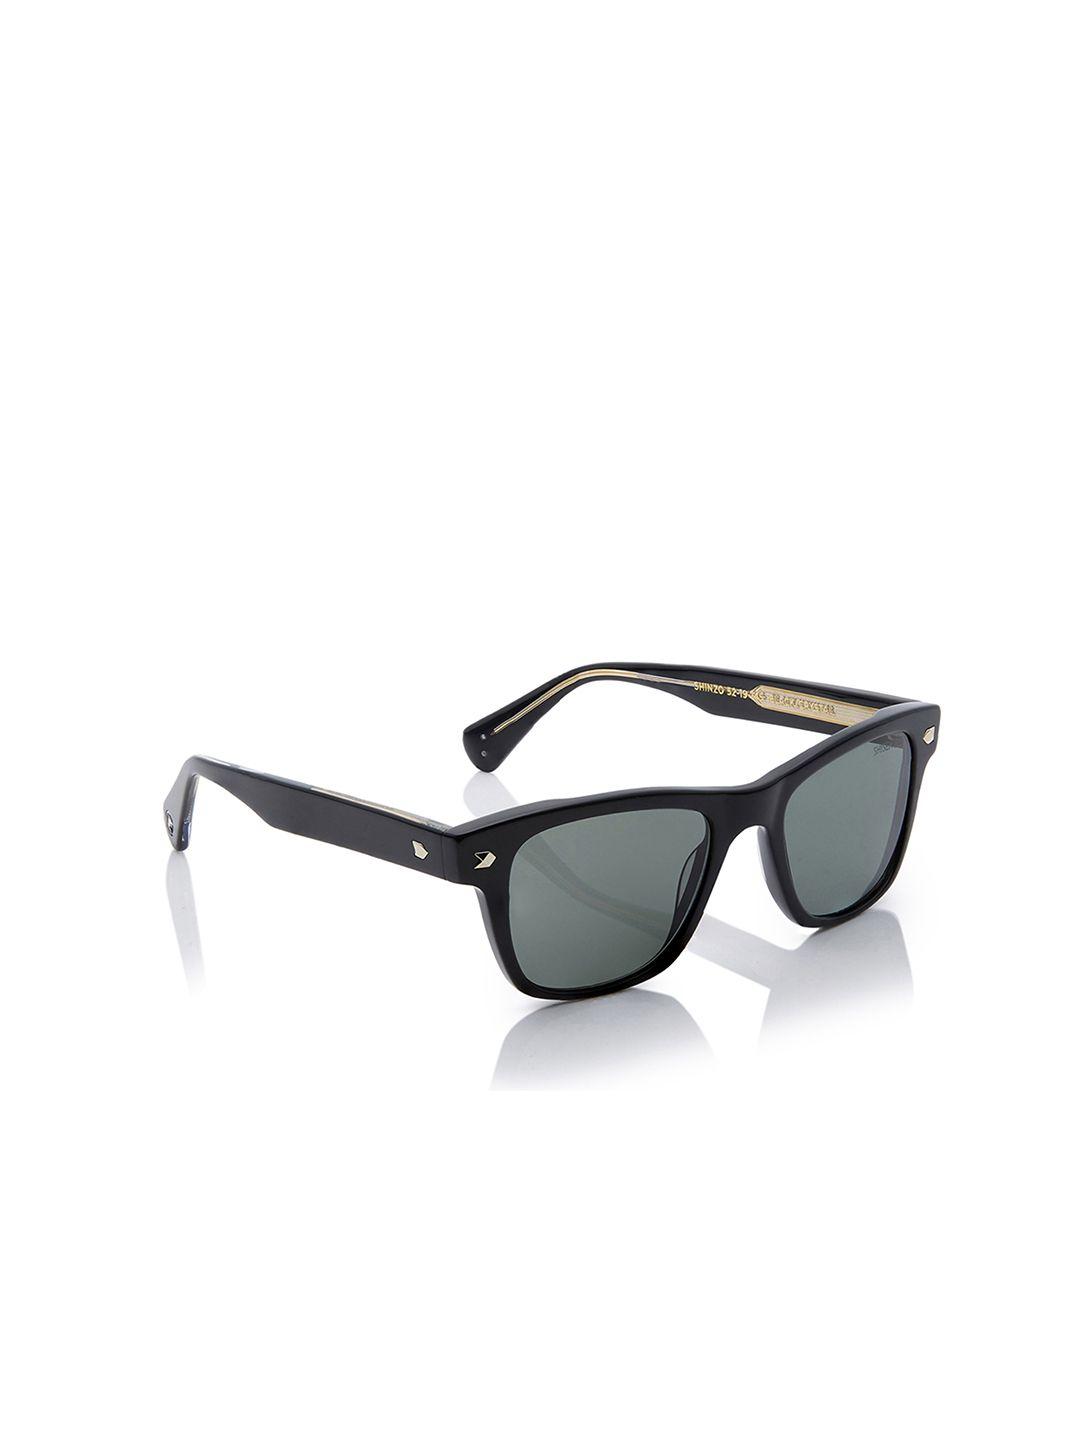 shisen fox shinzo unisex square sunglasses with uv protected lens sg043